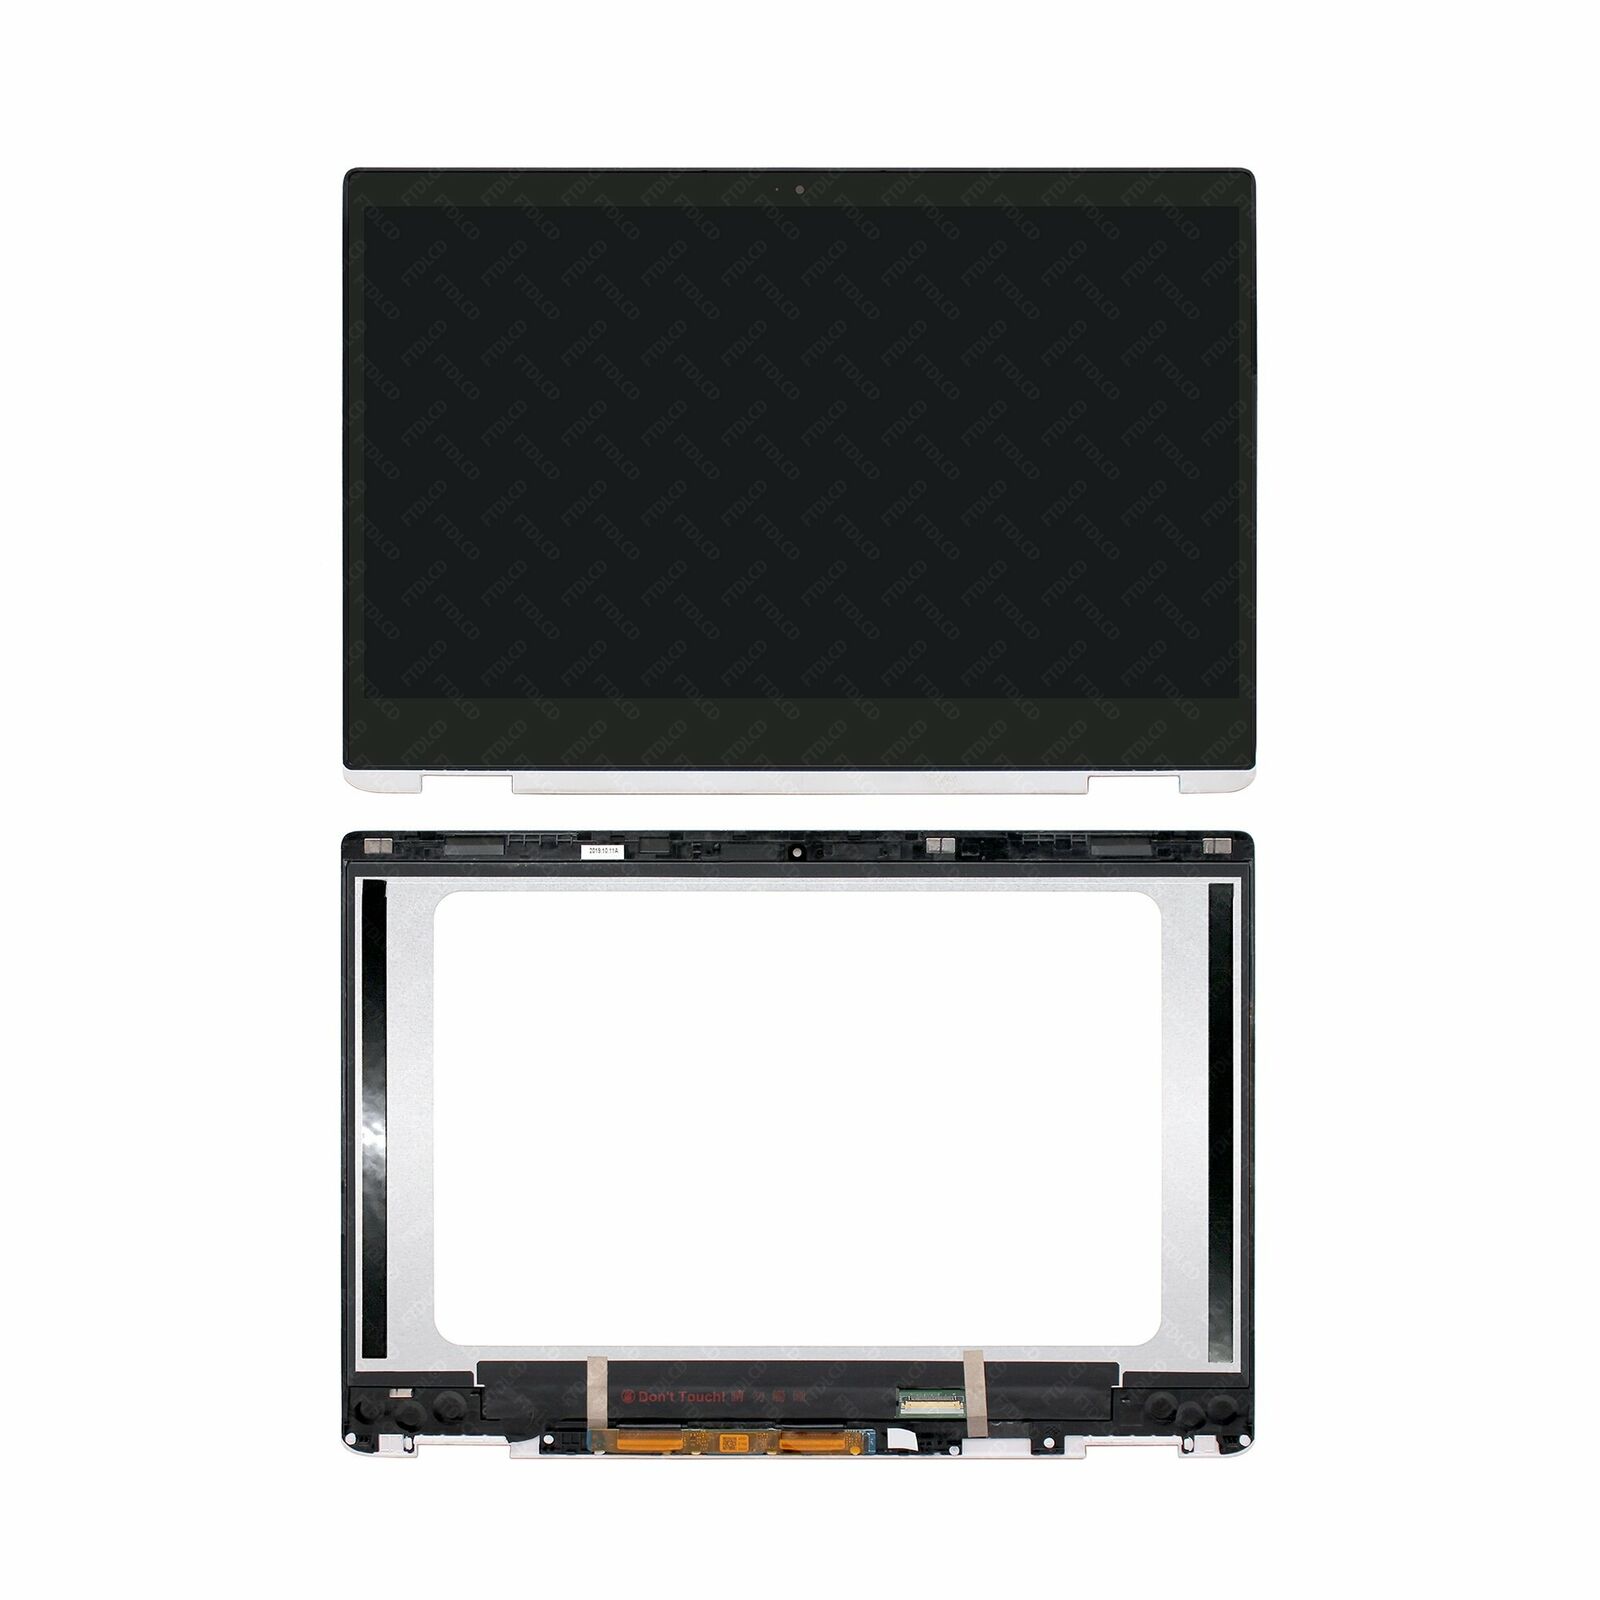 L36904-001 LCD Touchscreen Digitizer Assembly for HP Chromebook x360 14-da0021nr